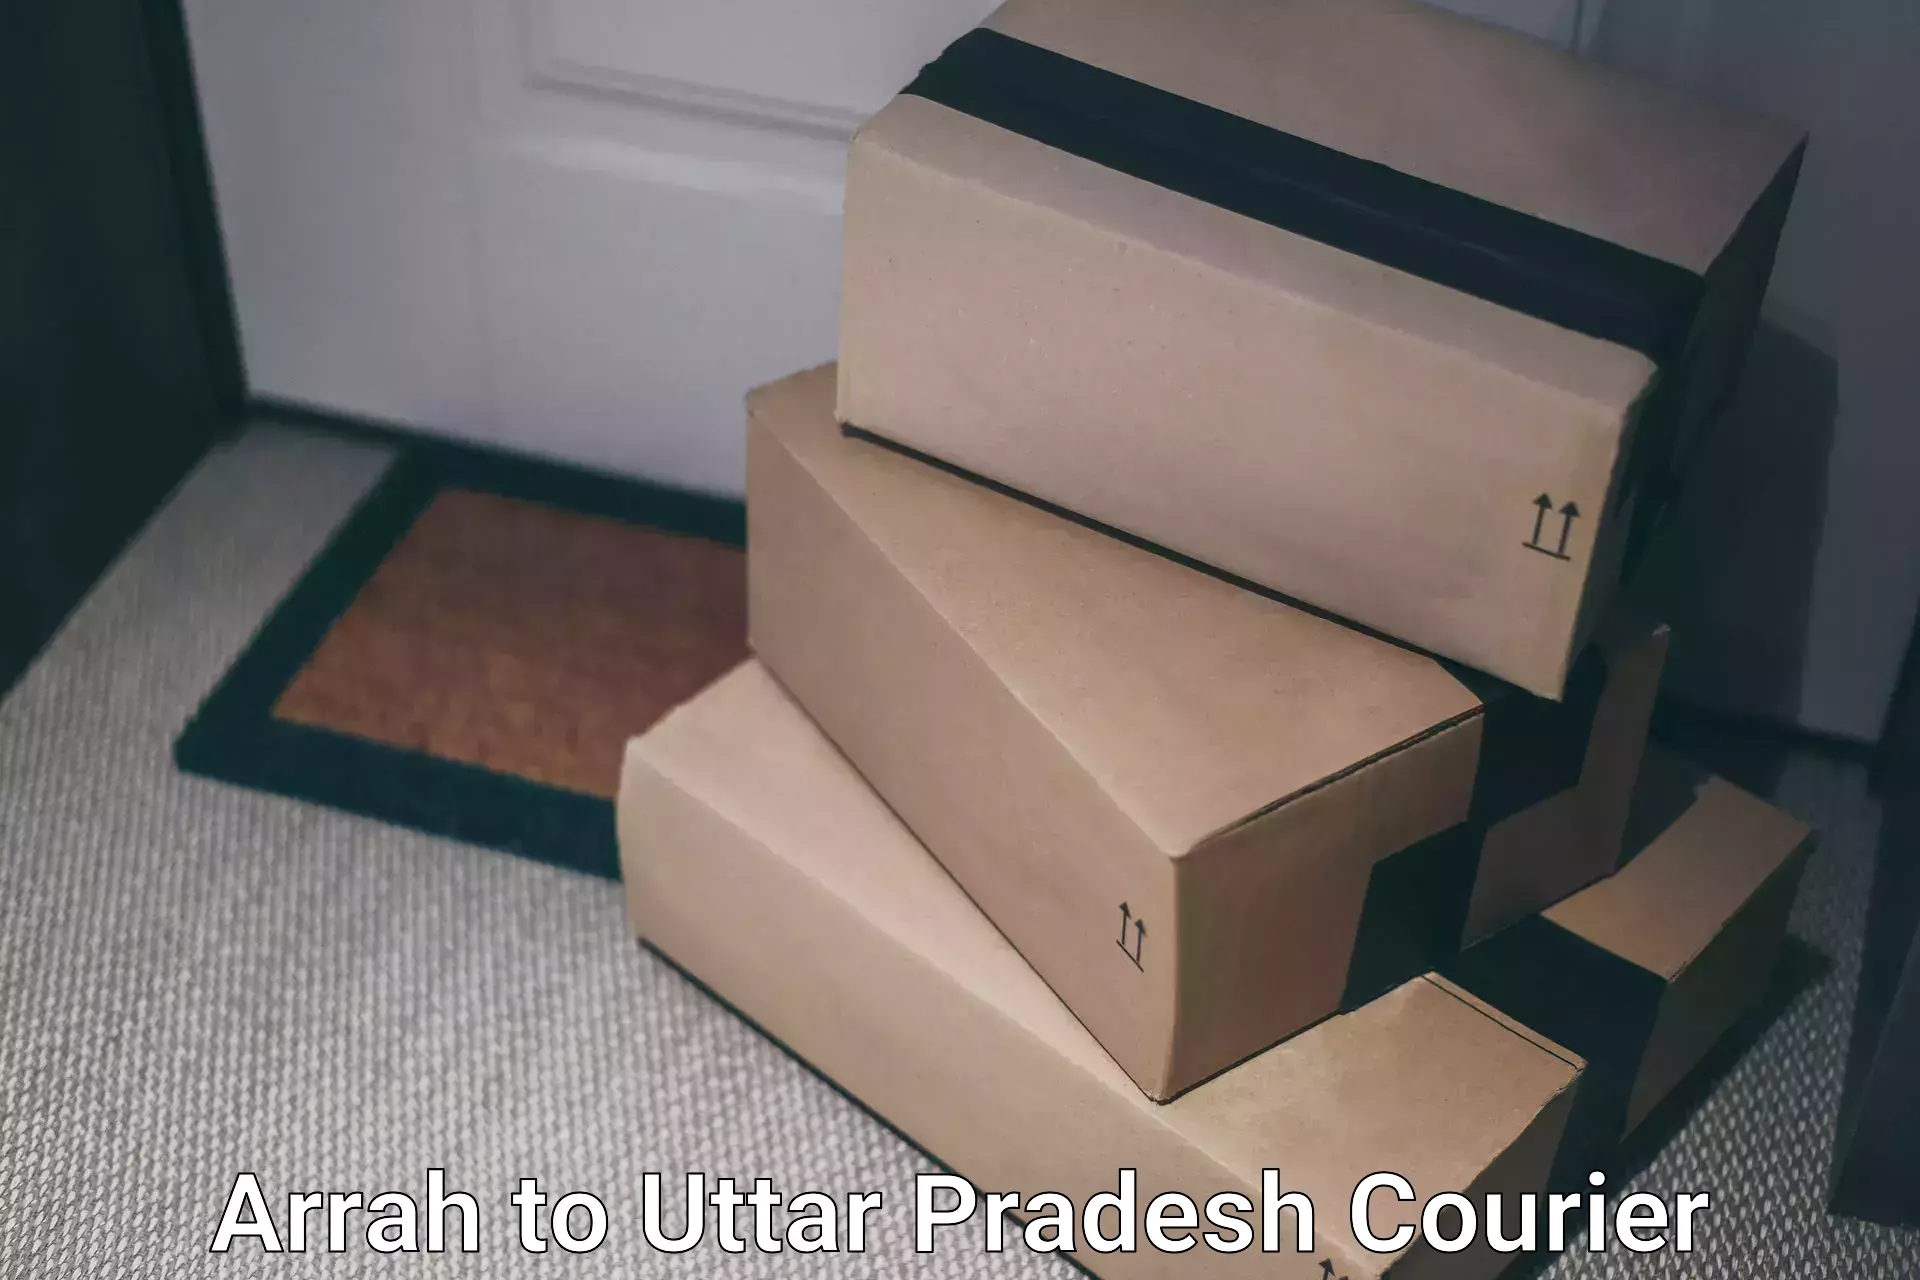 Courier service partnerships in Arrah to Uttar Pradesh